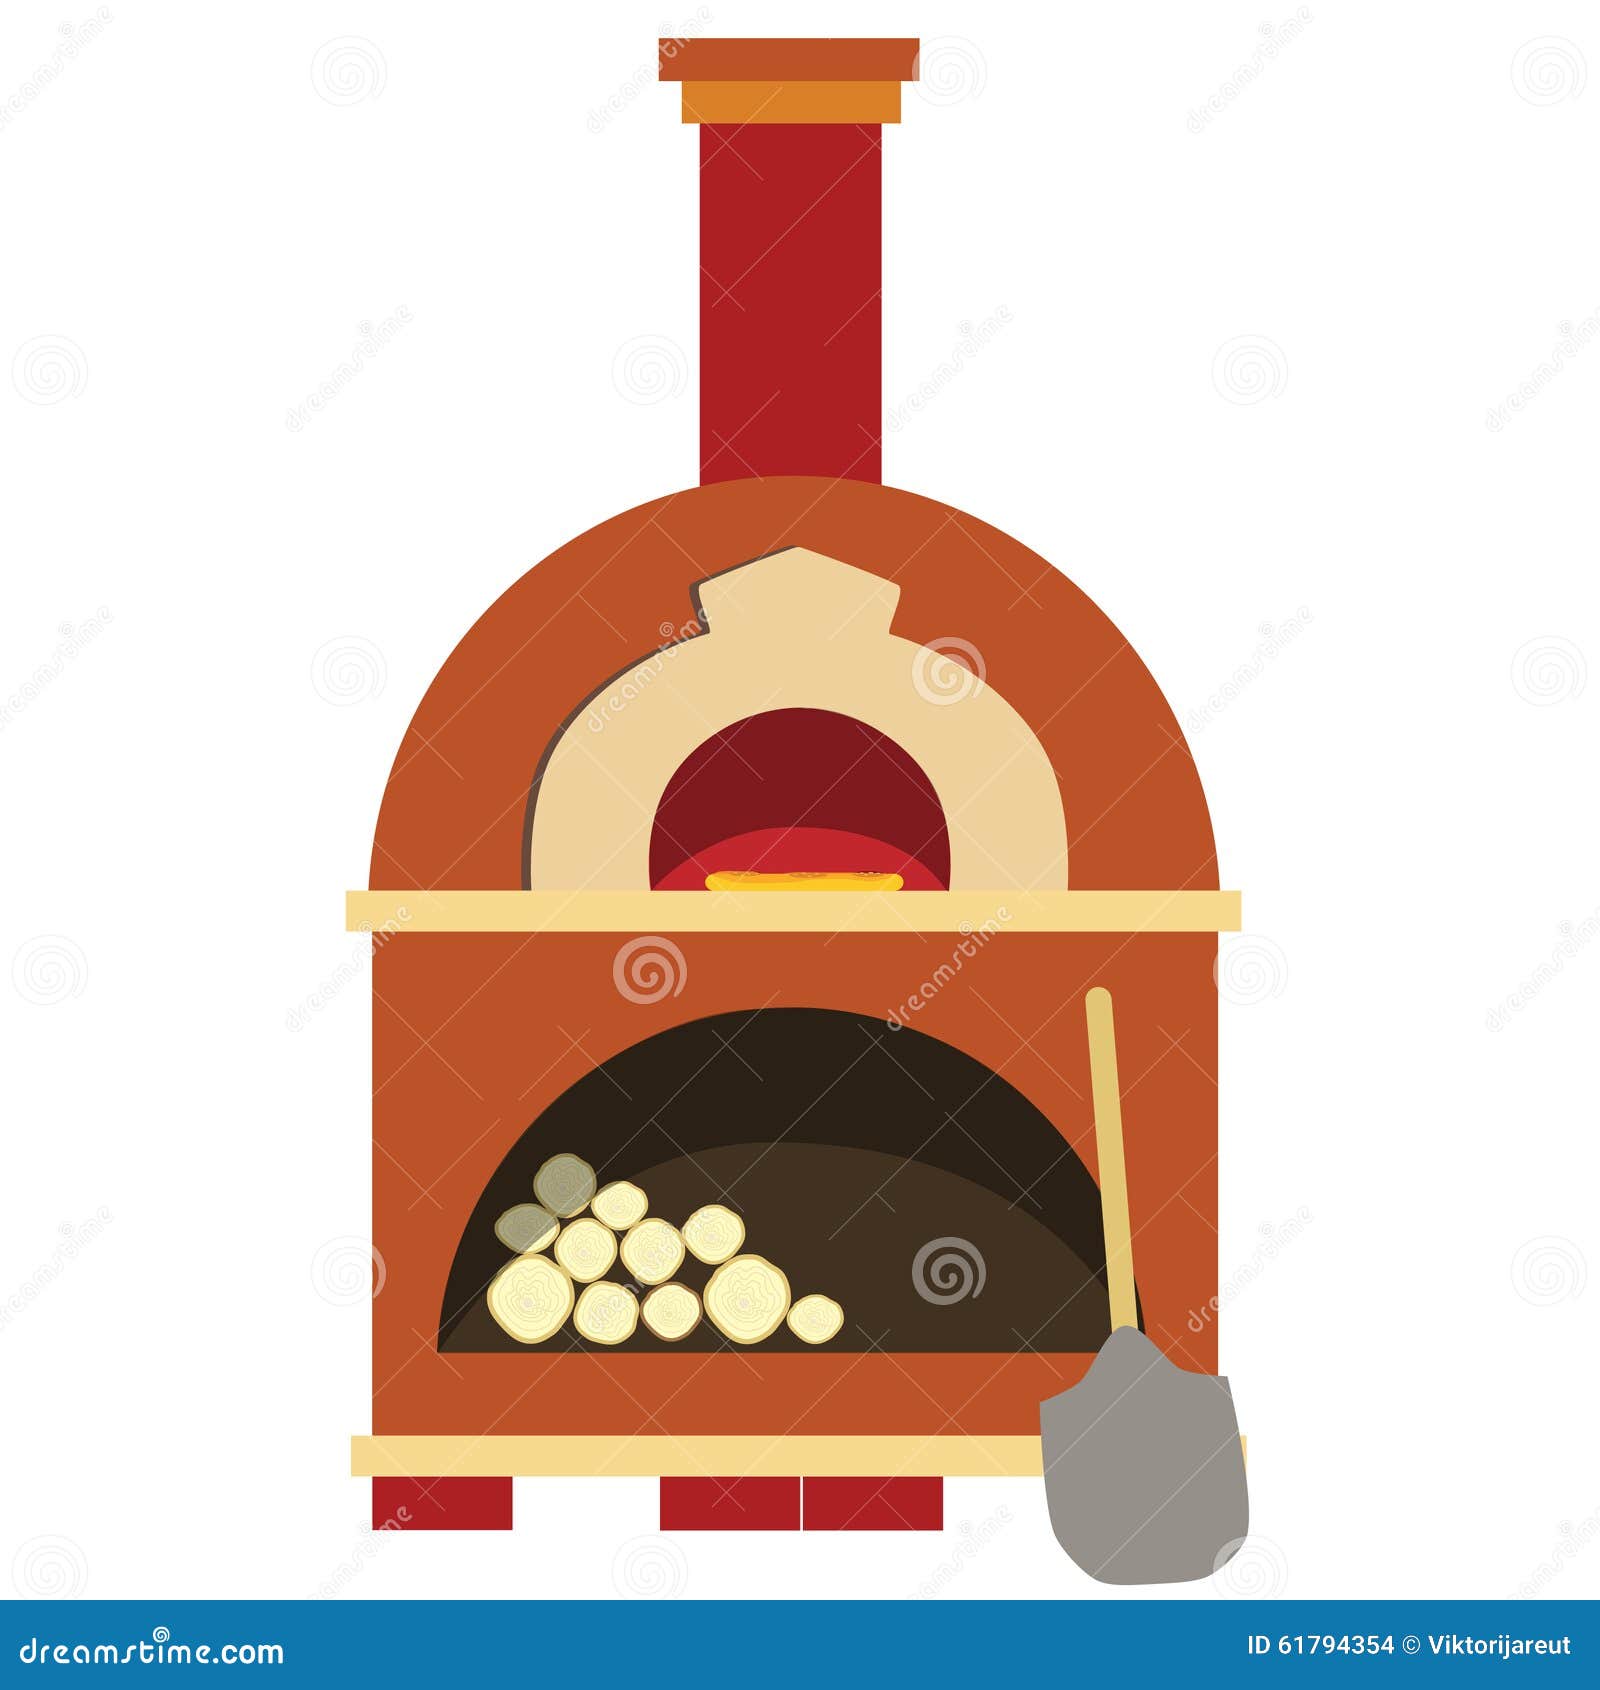 pizza oven clipart - photo #10